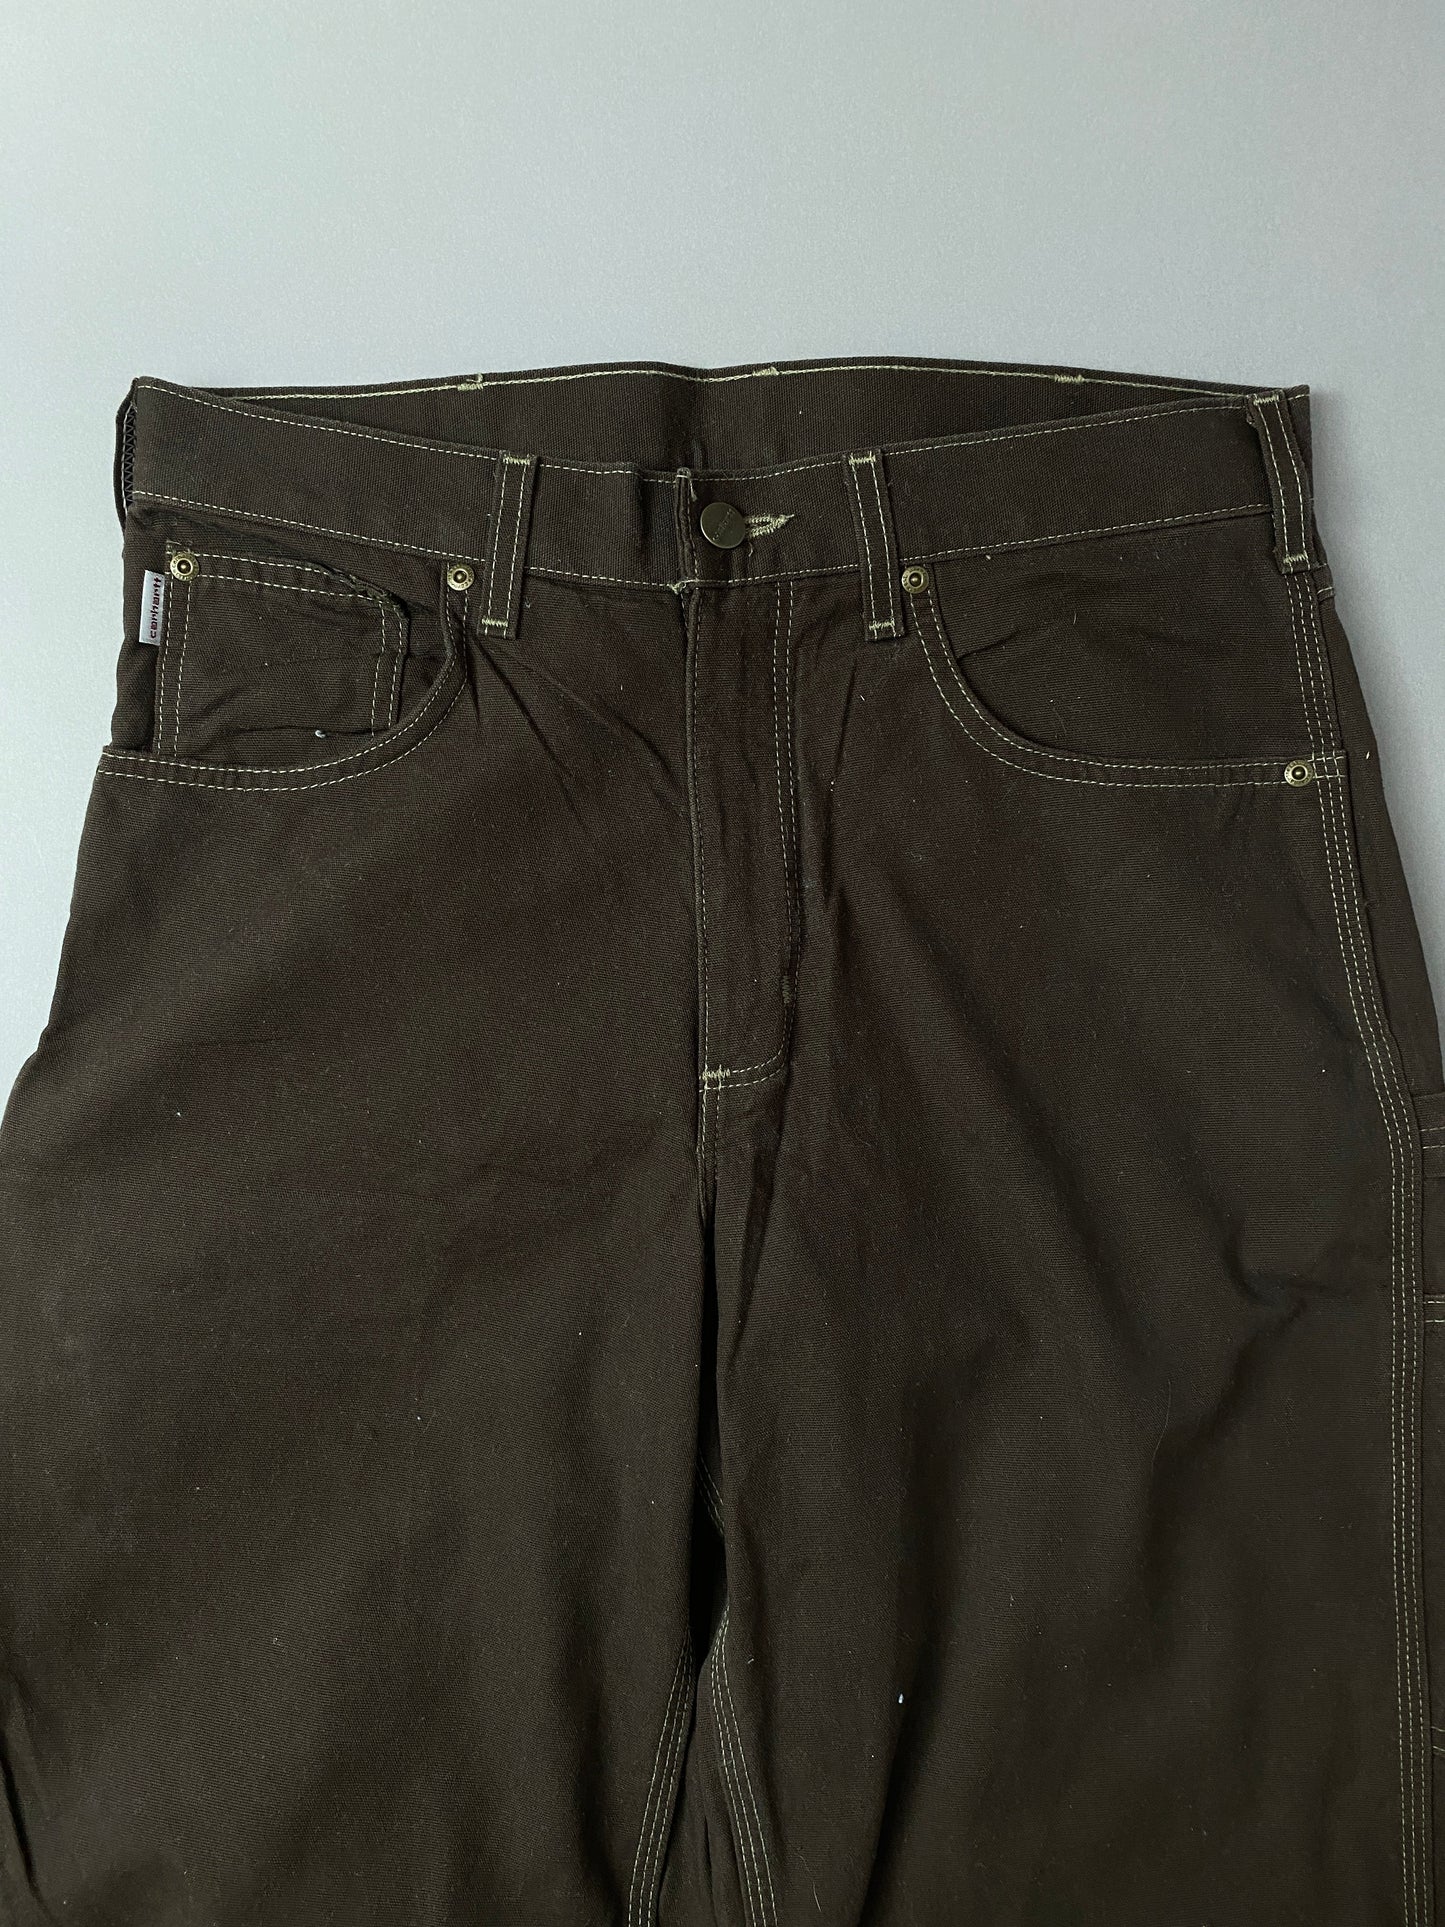 Carhartt Carpenter Pants - 32 x 34